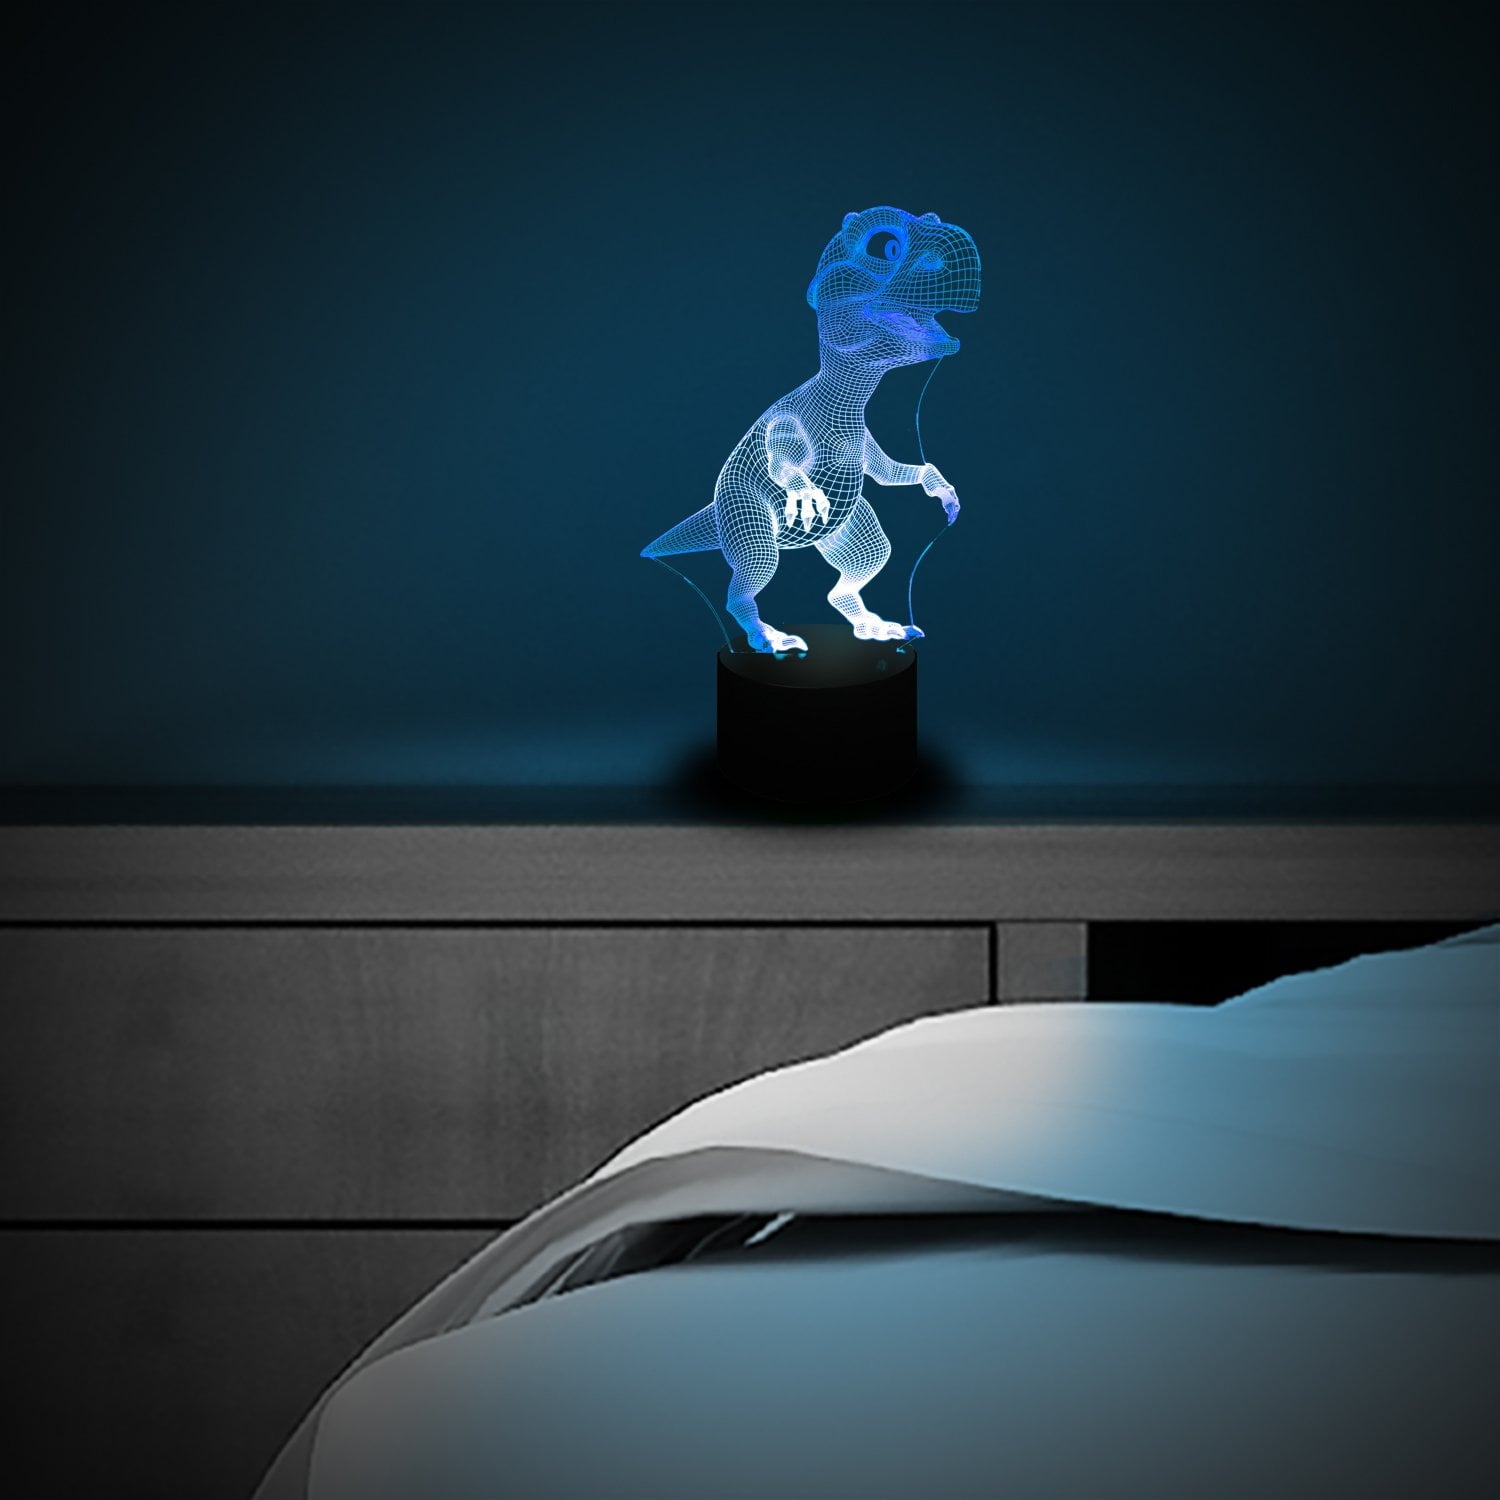 Dinosaur and Unicorn 3D Illusion Lamp Bundle